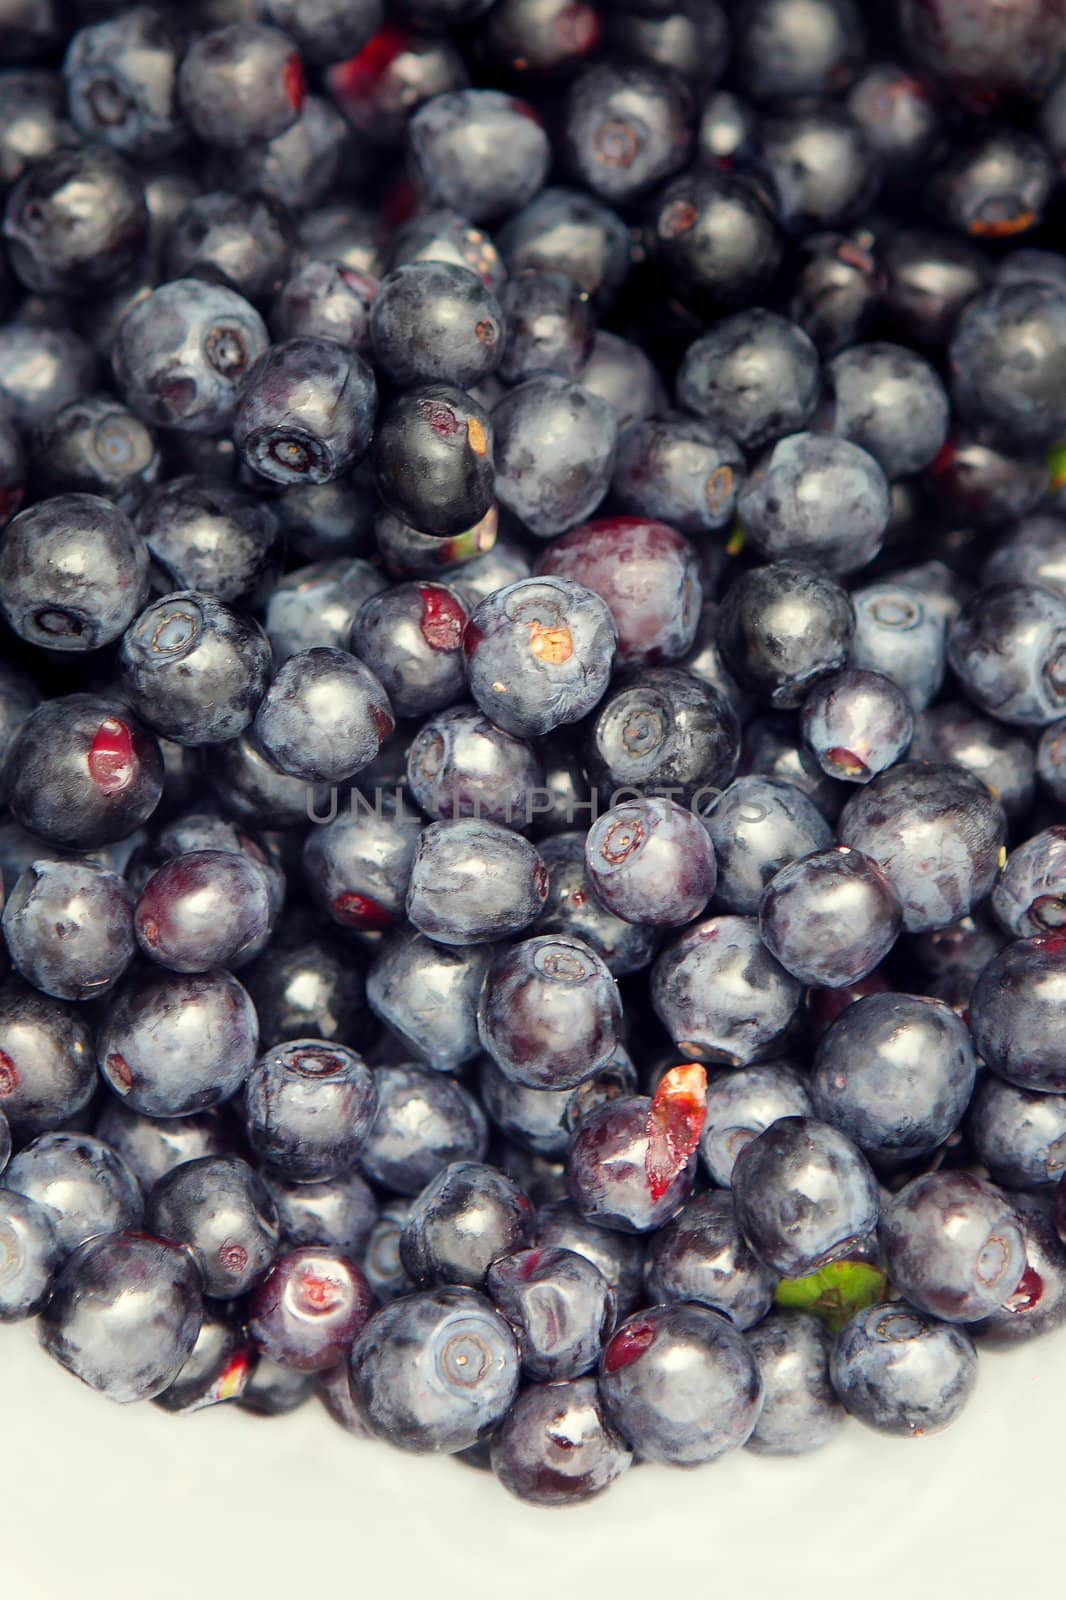 blueberry berry